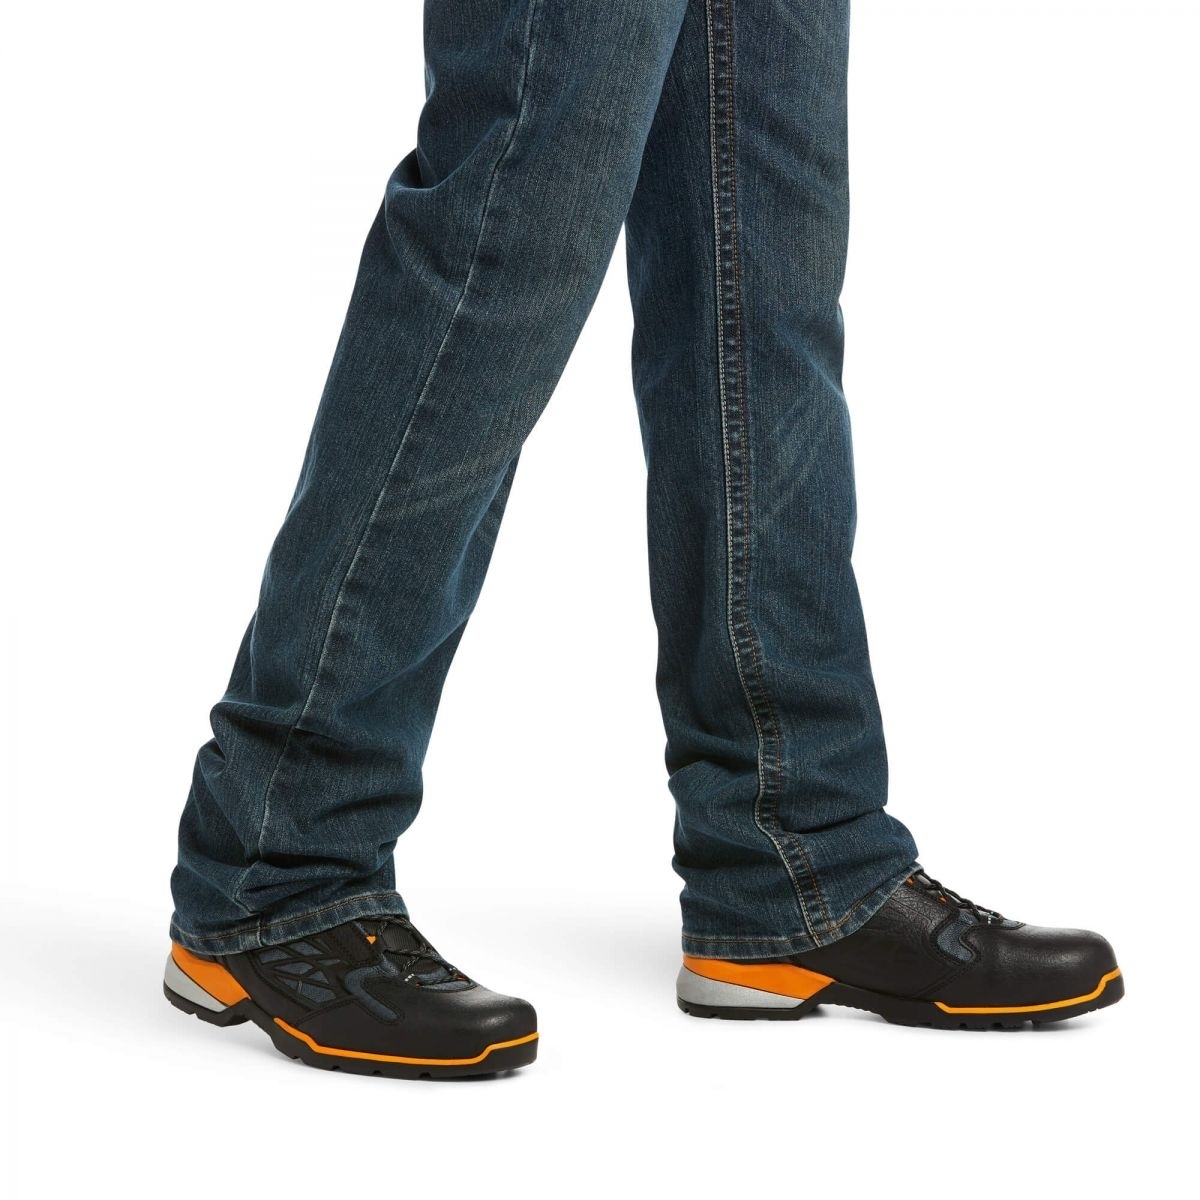 Ariat Rebar M4 Slim Fit Durastretch Straight Leg Jean - Work Jeans for Men - image 4 of 4